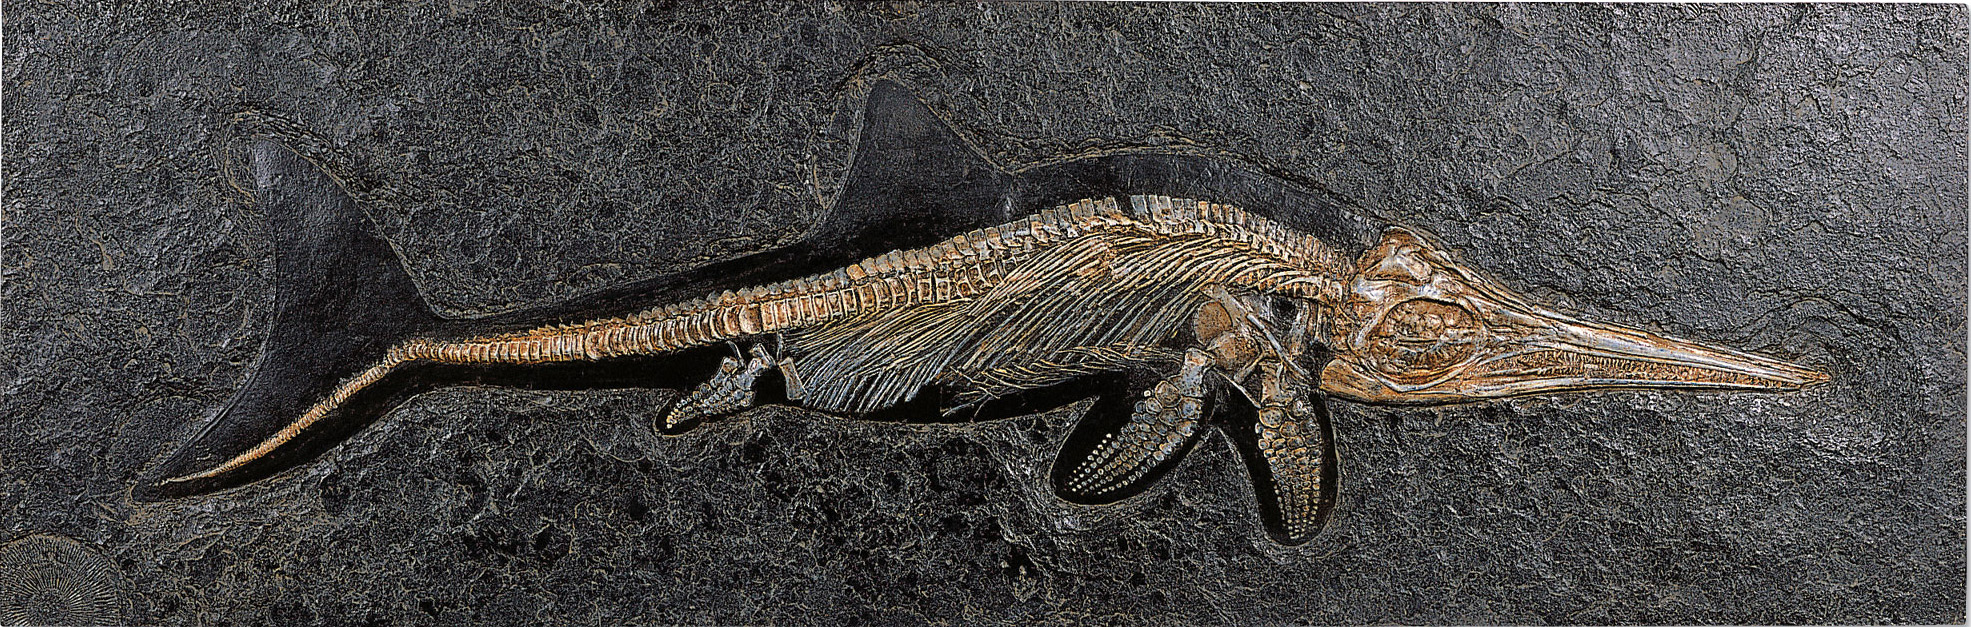 Fossil Ichthyosaur.